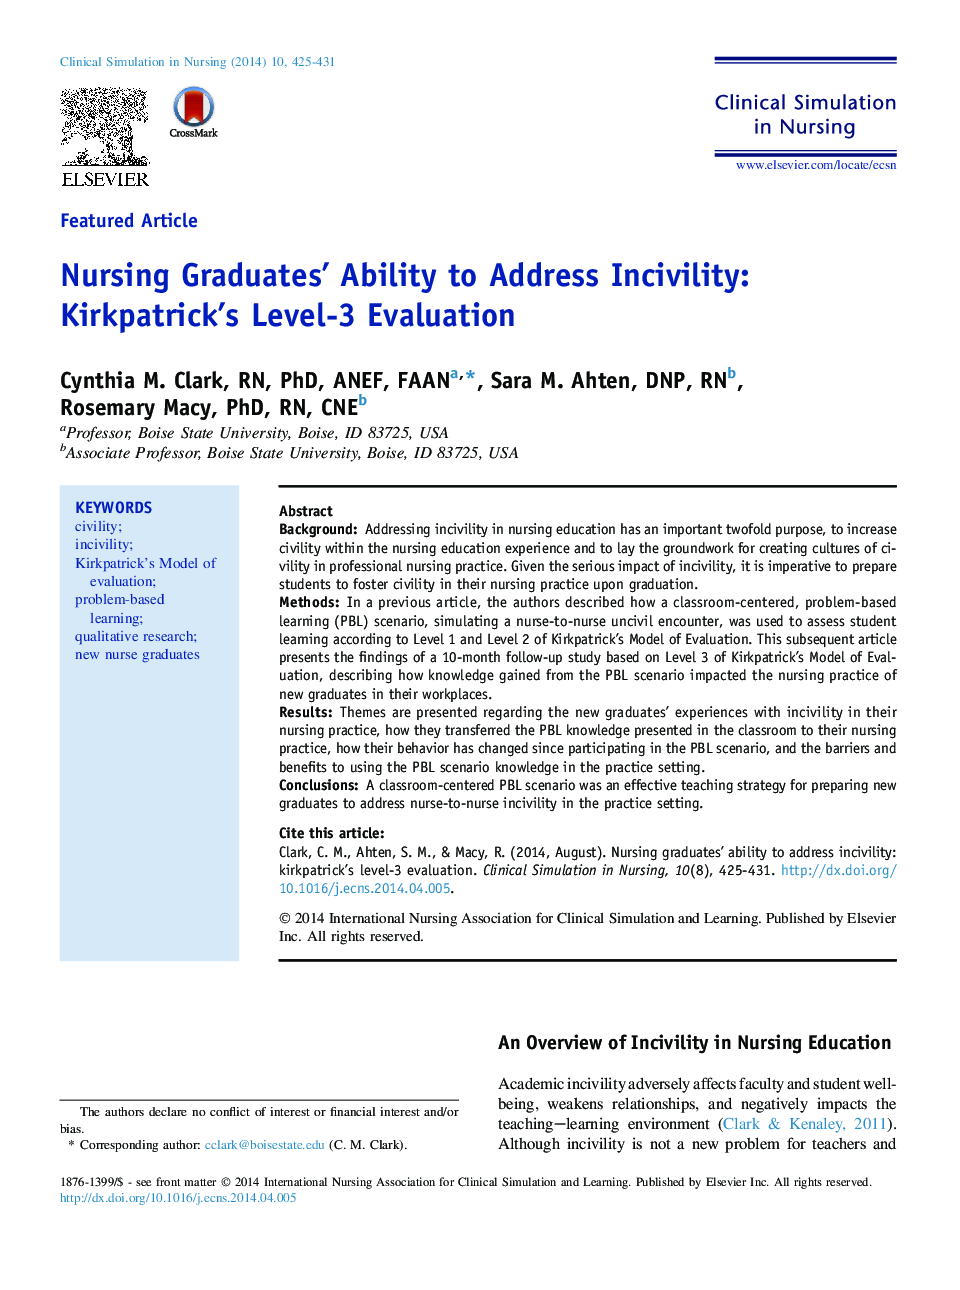 Nursing Graduates' Ability to Address Incivility: Kirkpatrick's Level-3 Evaluation